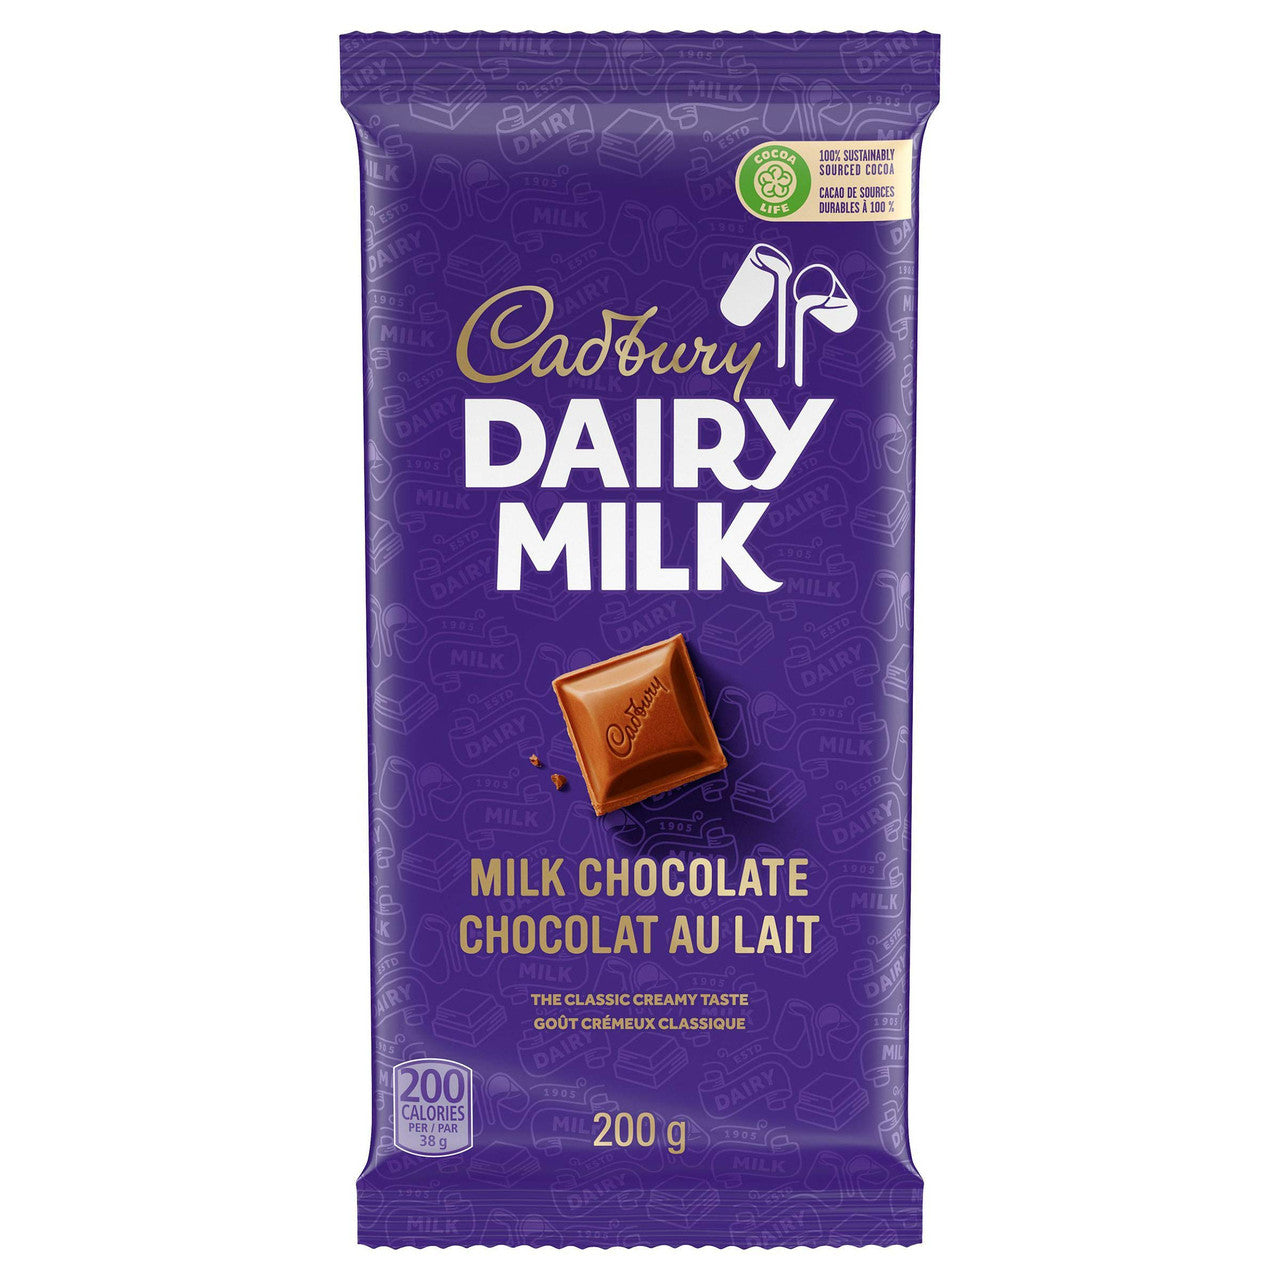 Cadbury Dairy Milk Chocolate Bar 200g/7oz. (Imported from Canada)